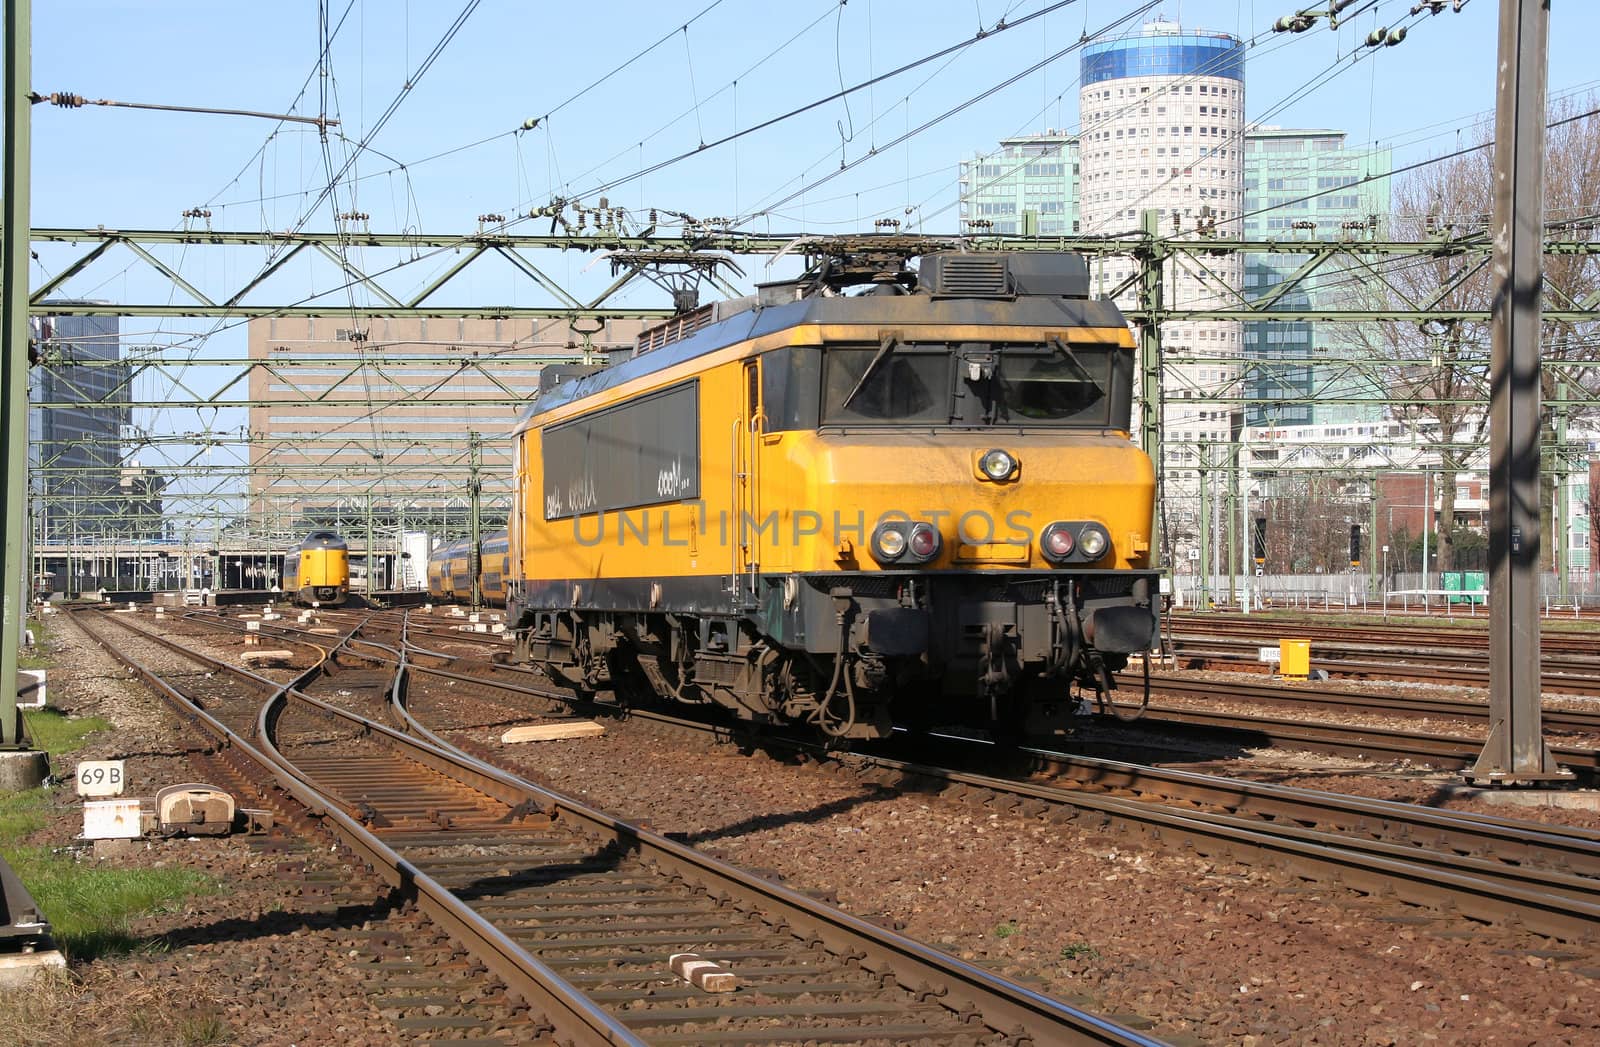 Locomotive by JanKranendonk